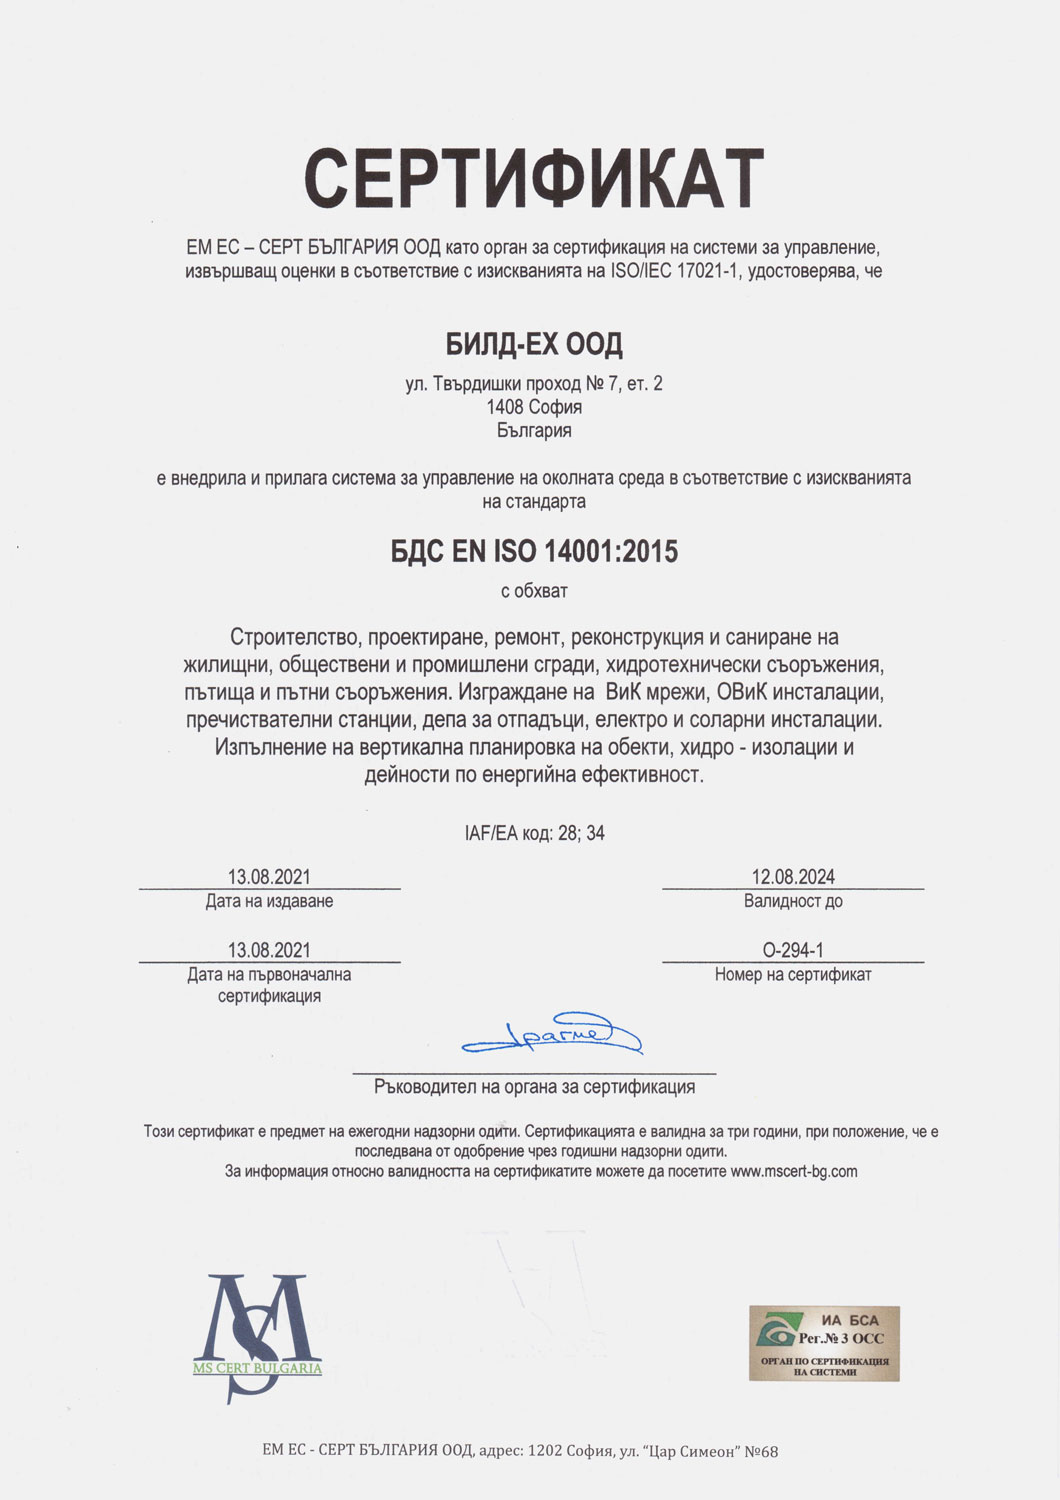 Certificate ISO 14001-Build-ex